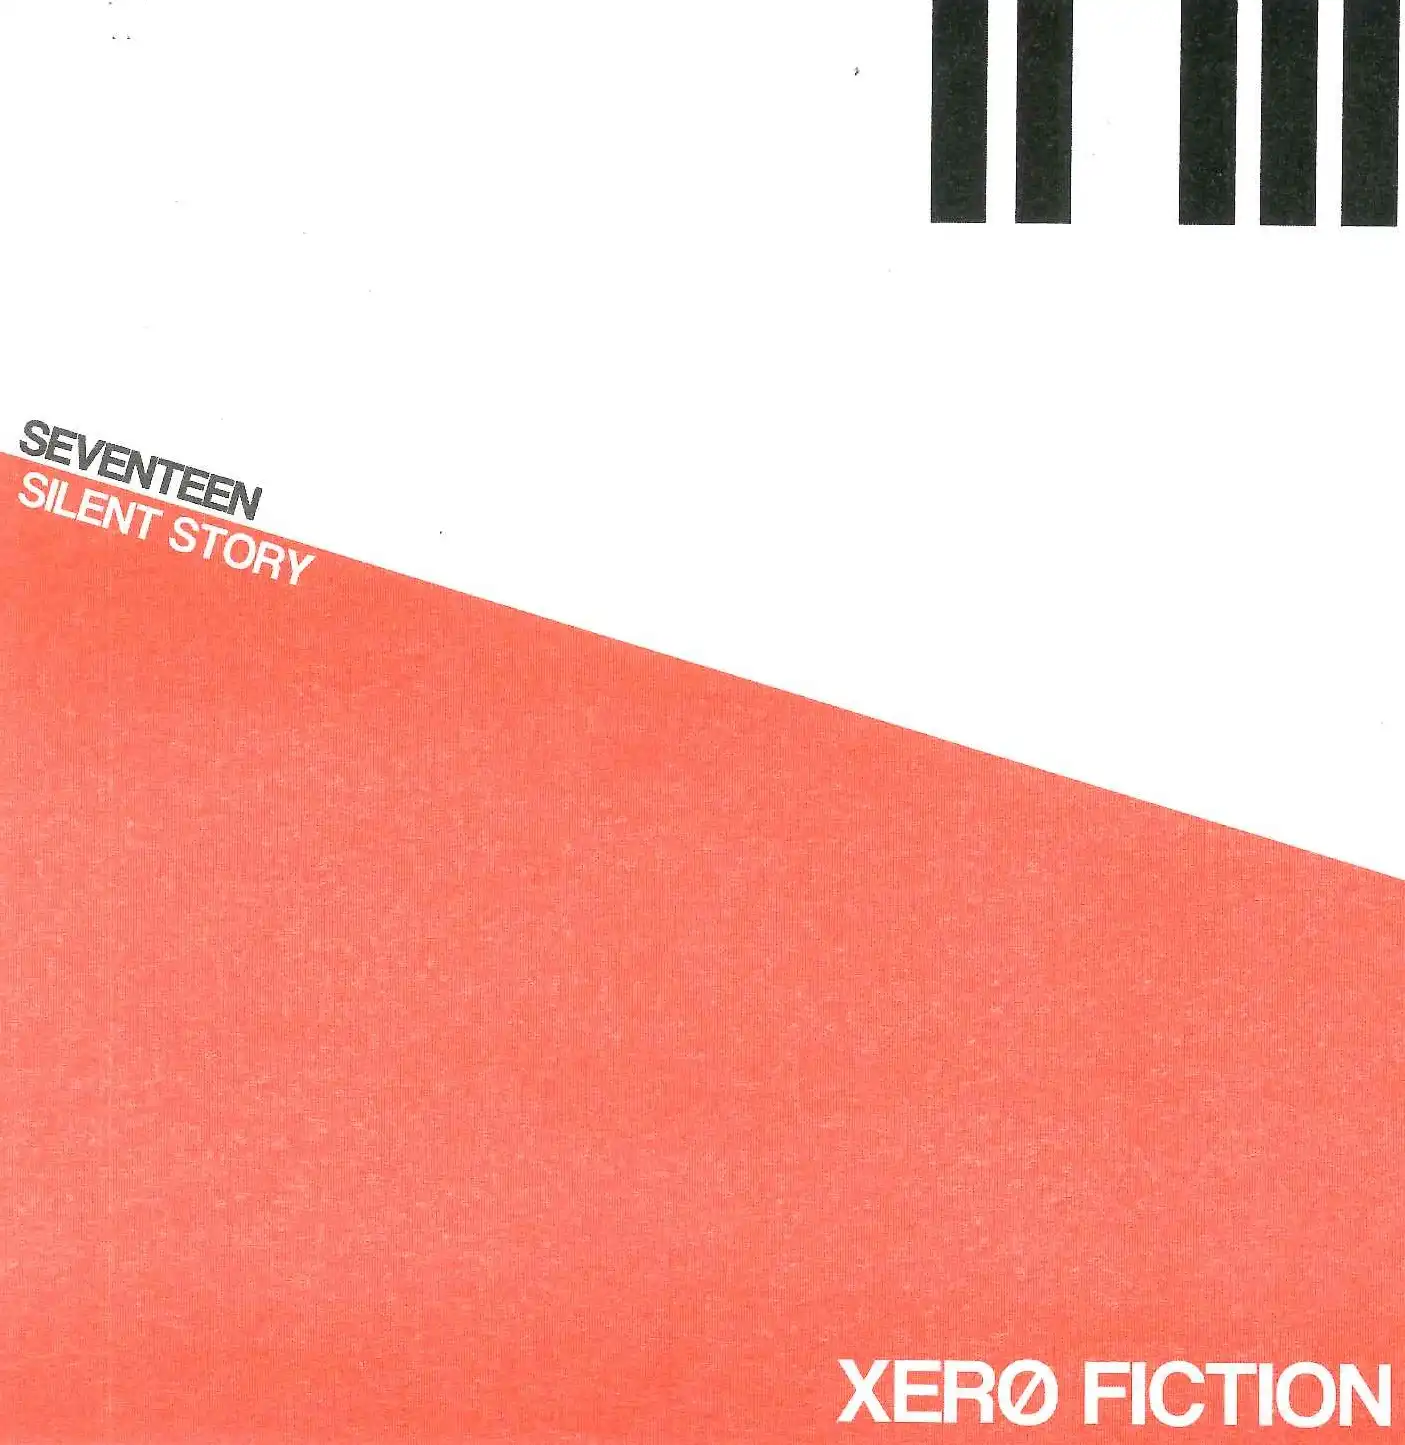 XERO FICTION / SEVENTEEN  SILENT STORY (RSD)